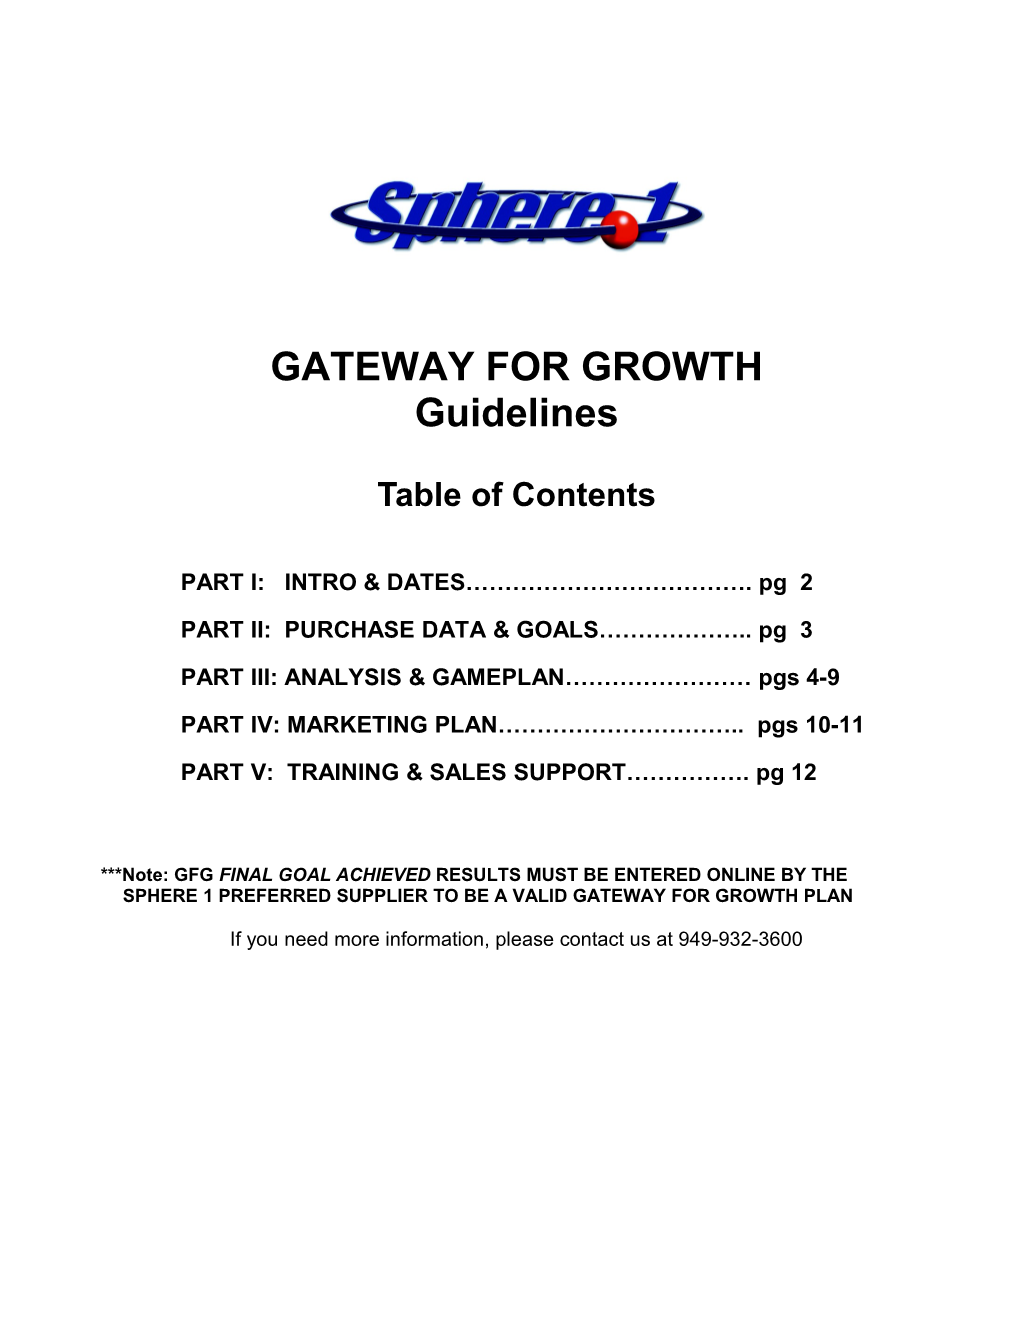 Gateway for Growth